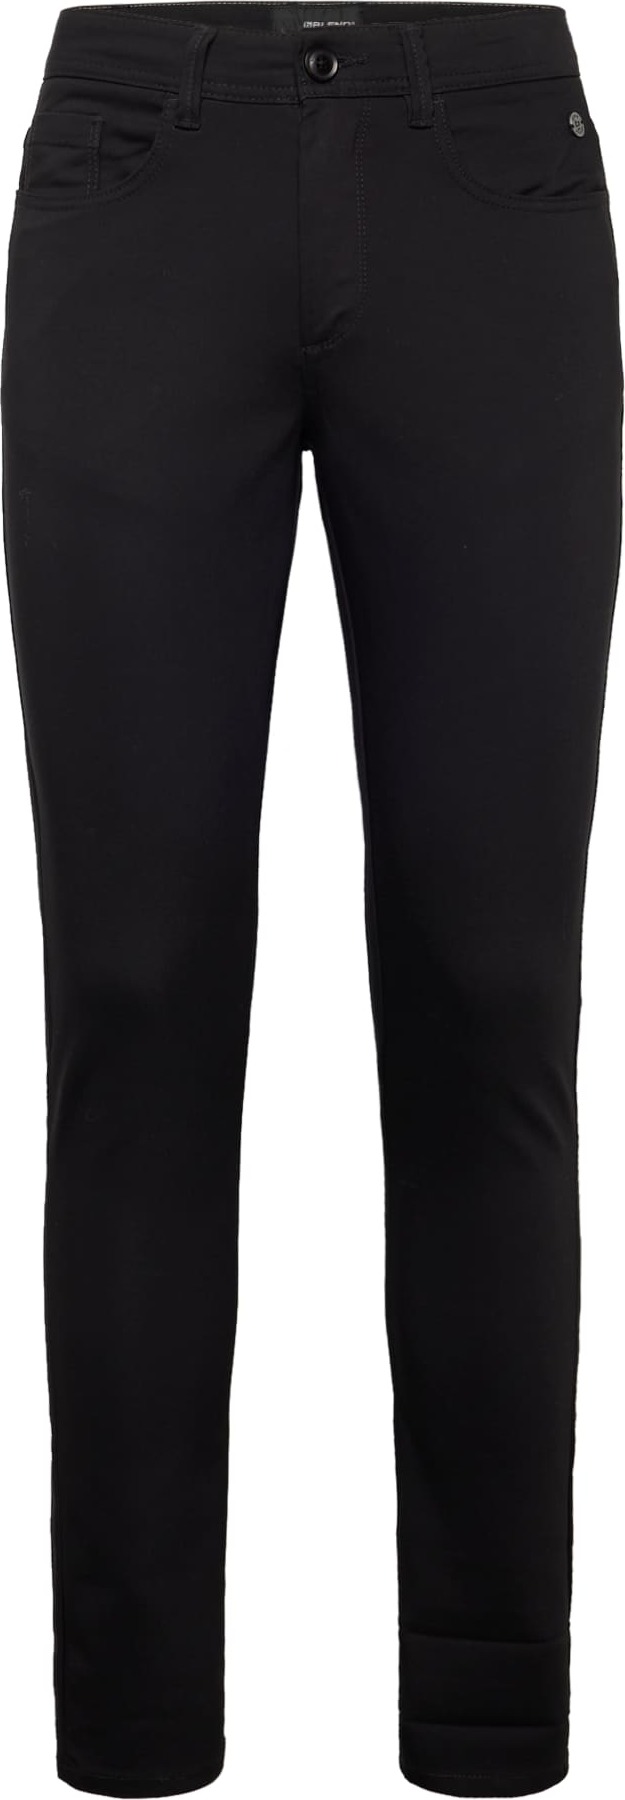 Chino kalhoty 'Newbury' Blend černá